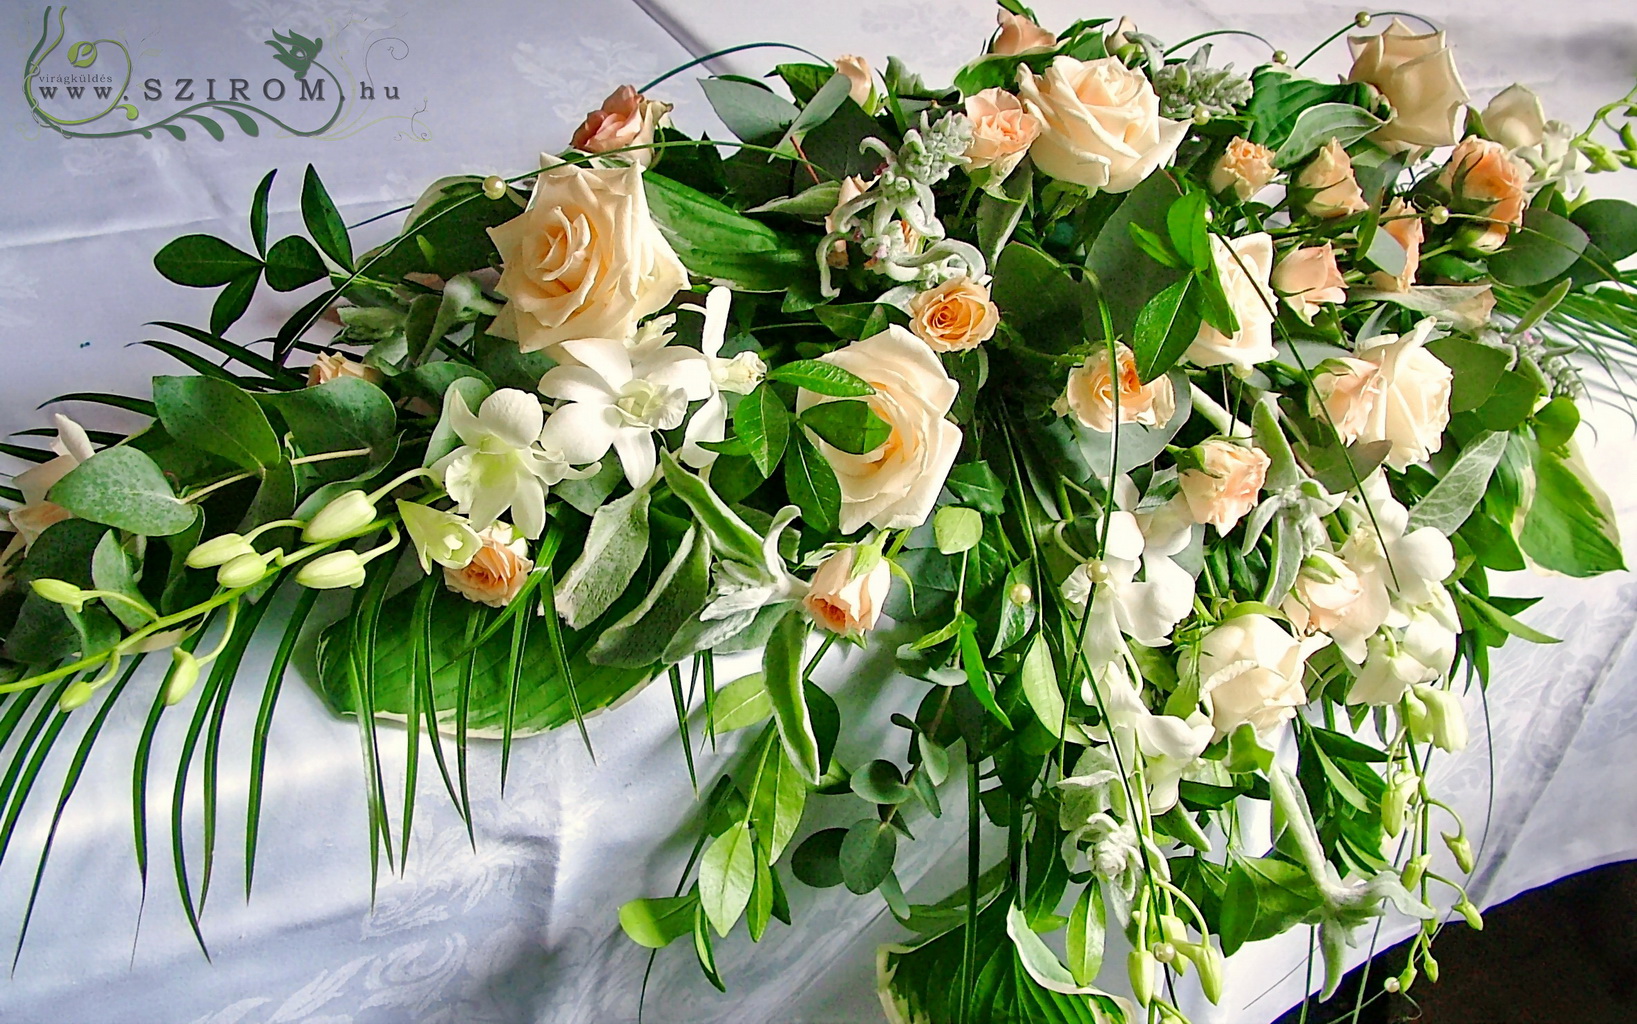 flower delivery Budapest - Main table centerpiece Gundel (spray roses, roses, dendrobium orchids, peach, white), Gundel Budapest, wedding